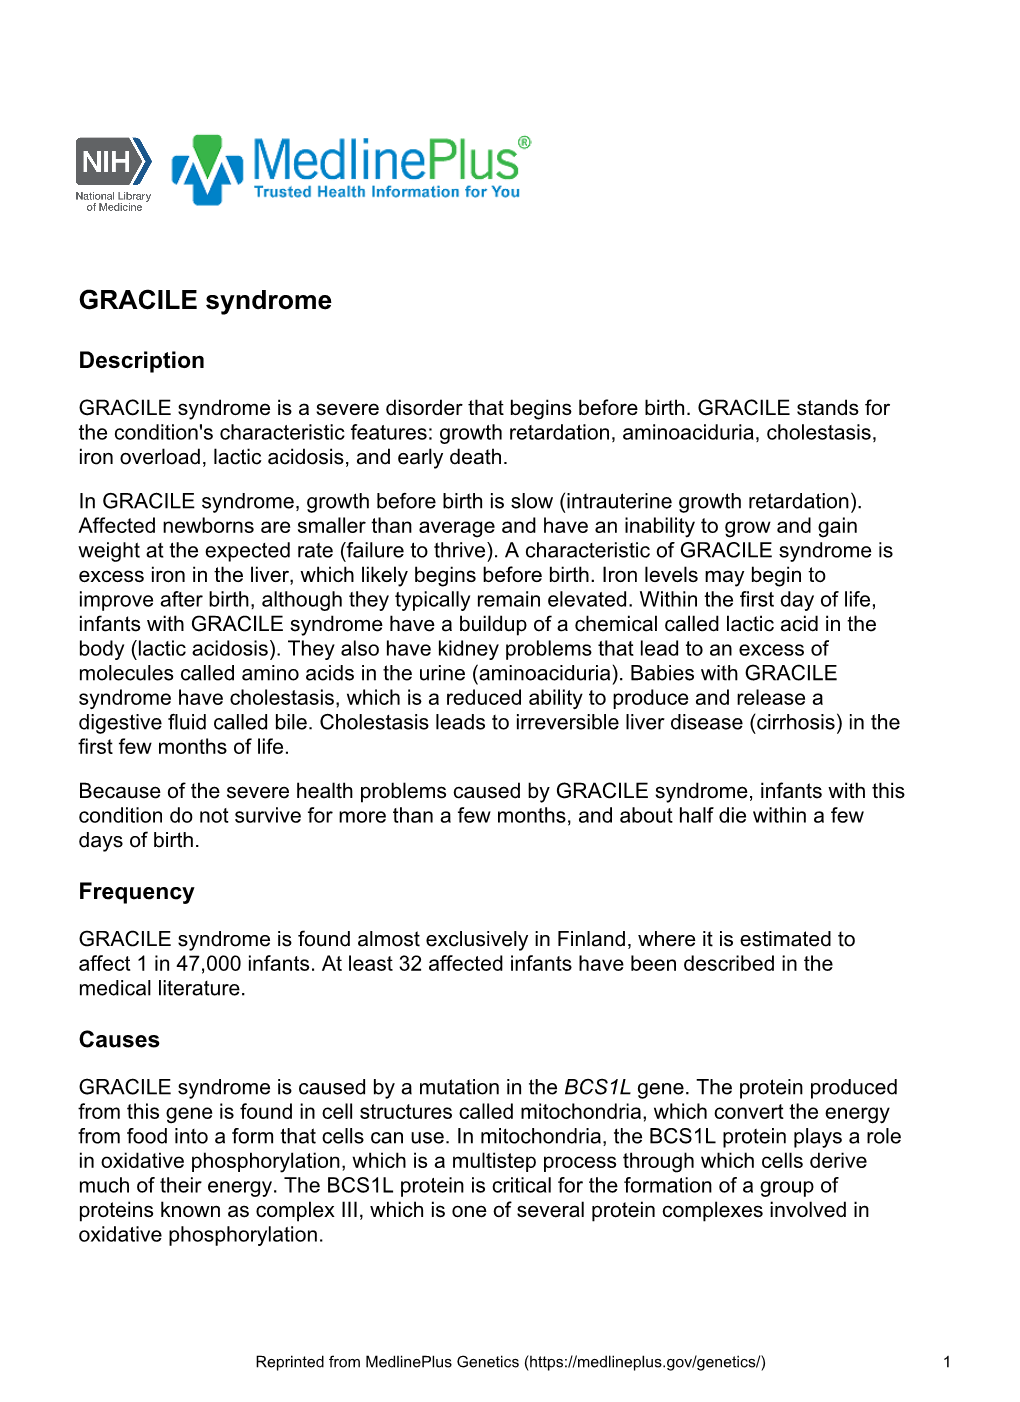 GRACILE Syndrome